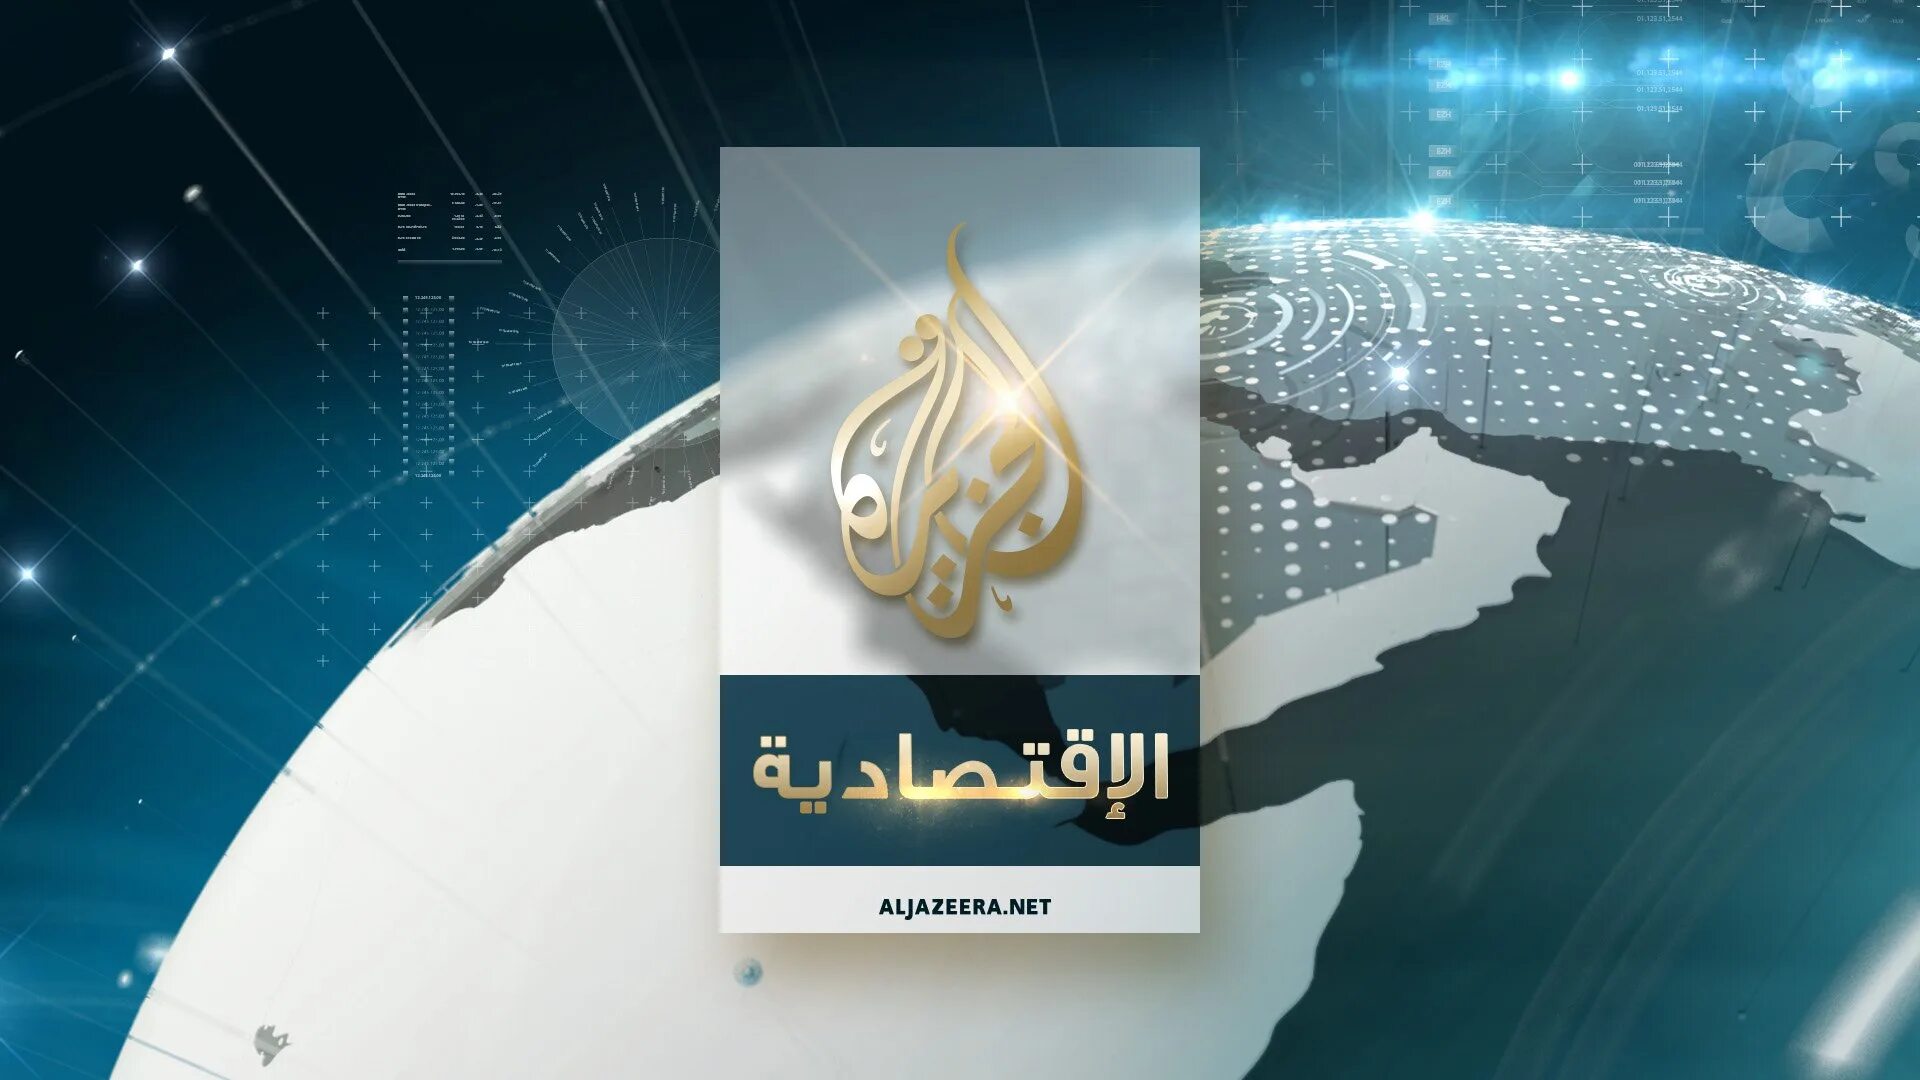 Aljazeera студия. Al Jazeera Arabic. Al Jazeera News. Al Jazeera Sports. Aljazeera net